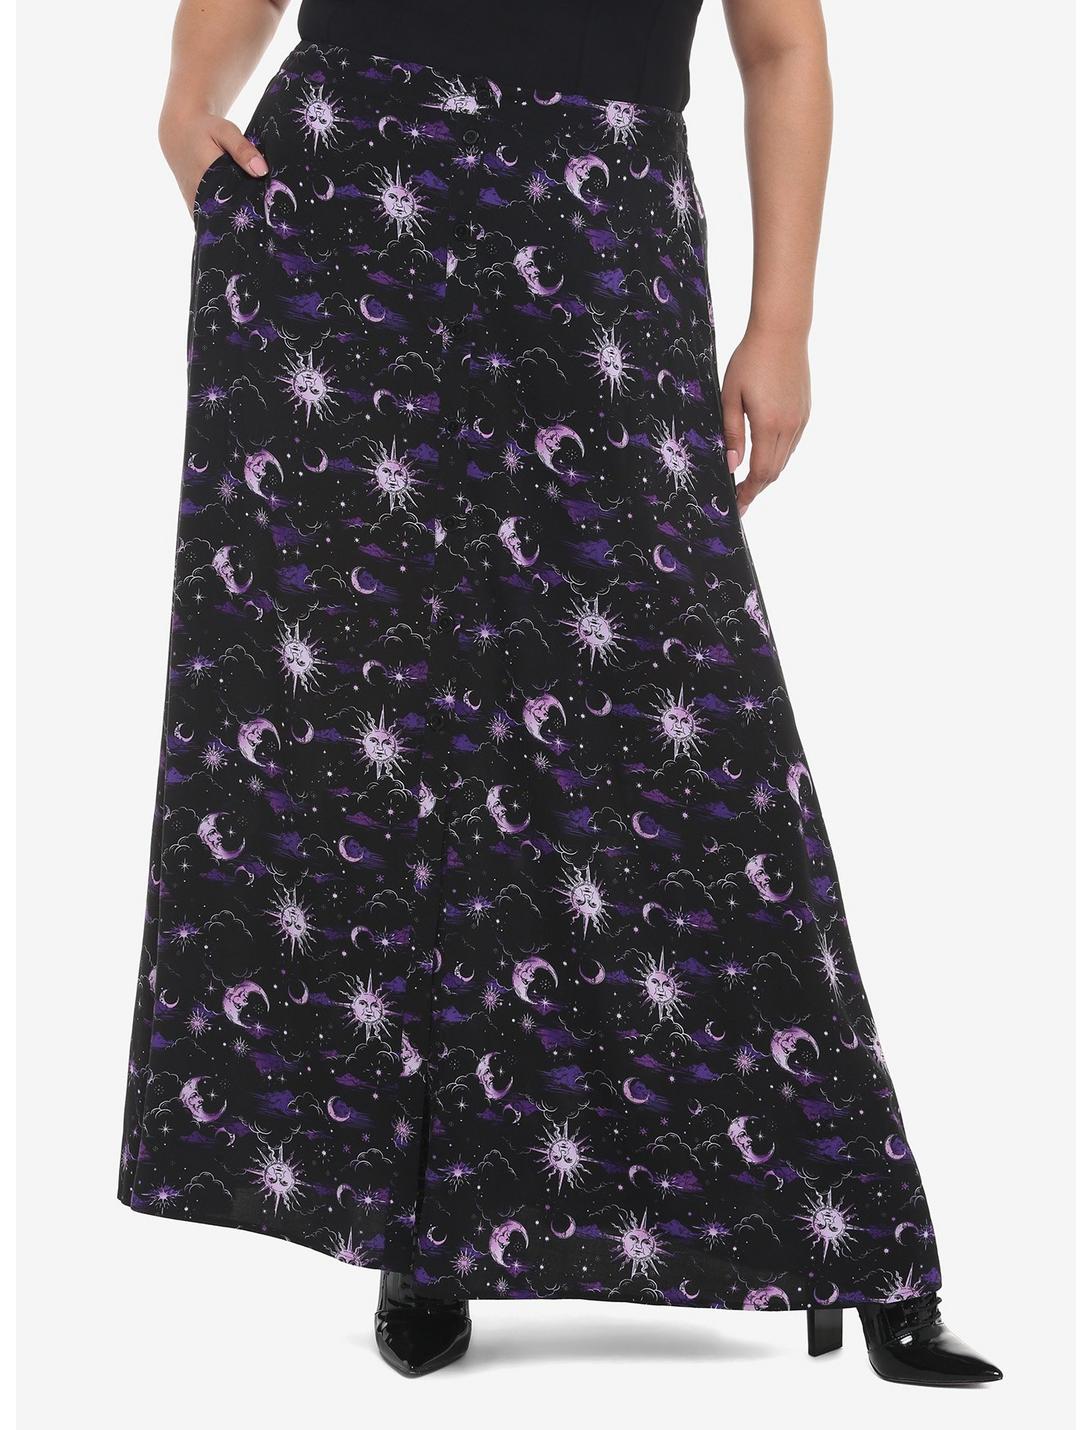 Celestial Print Maxi Skirt Plus Size, PURPLE, hi-res